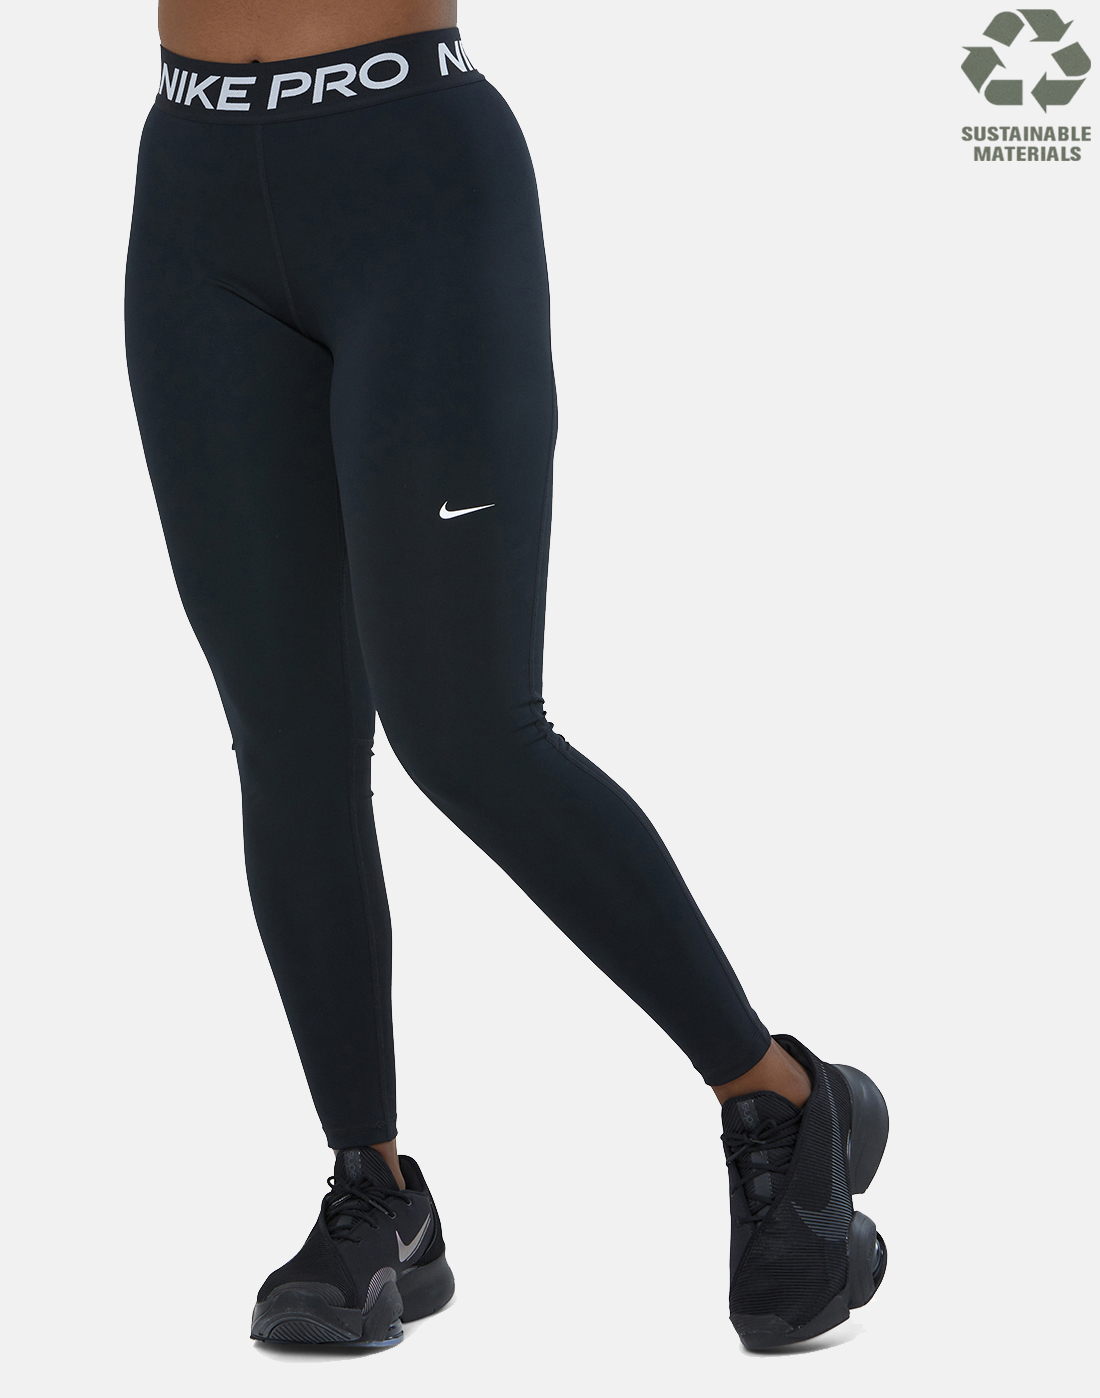 Nike Pro HR Tights Womens Black, £34.00